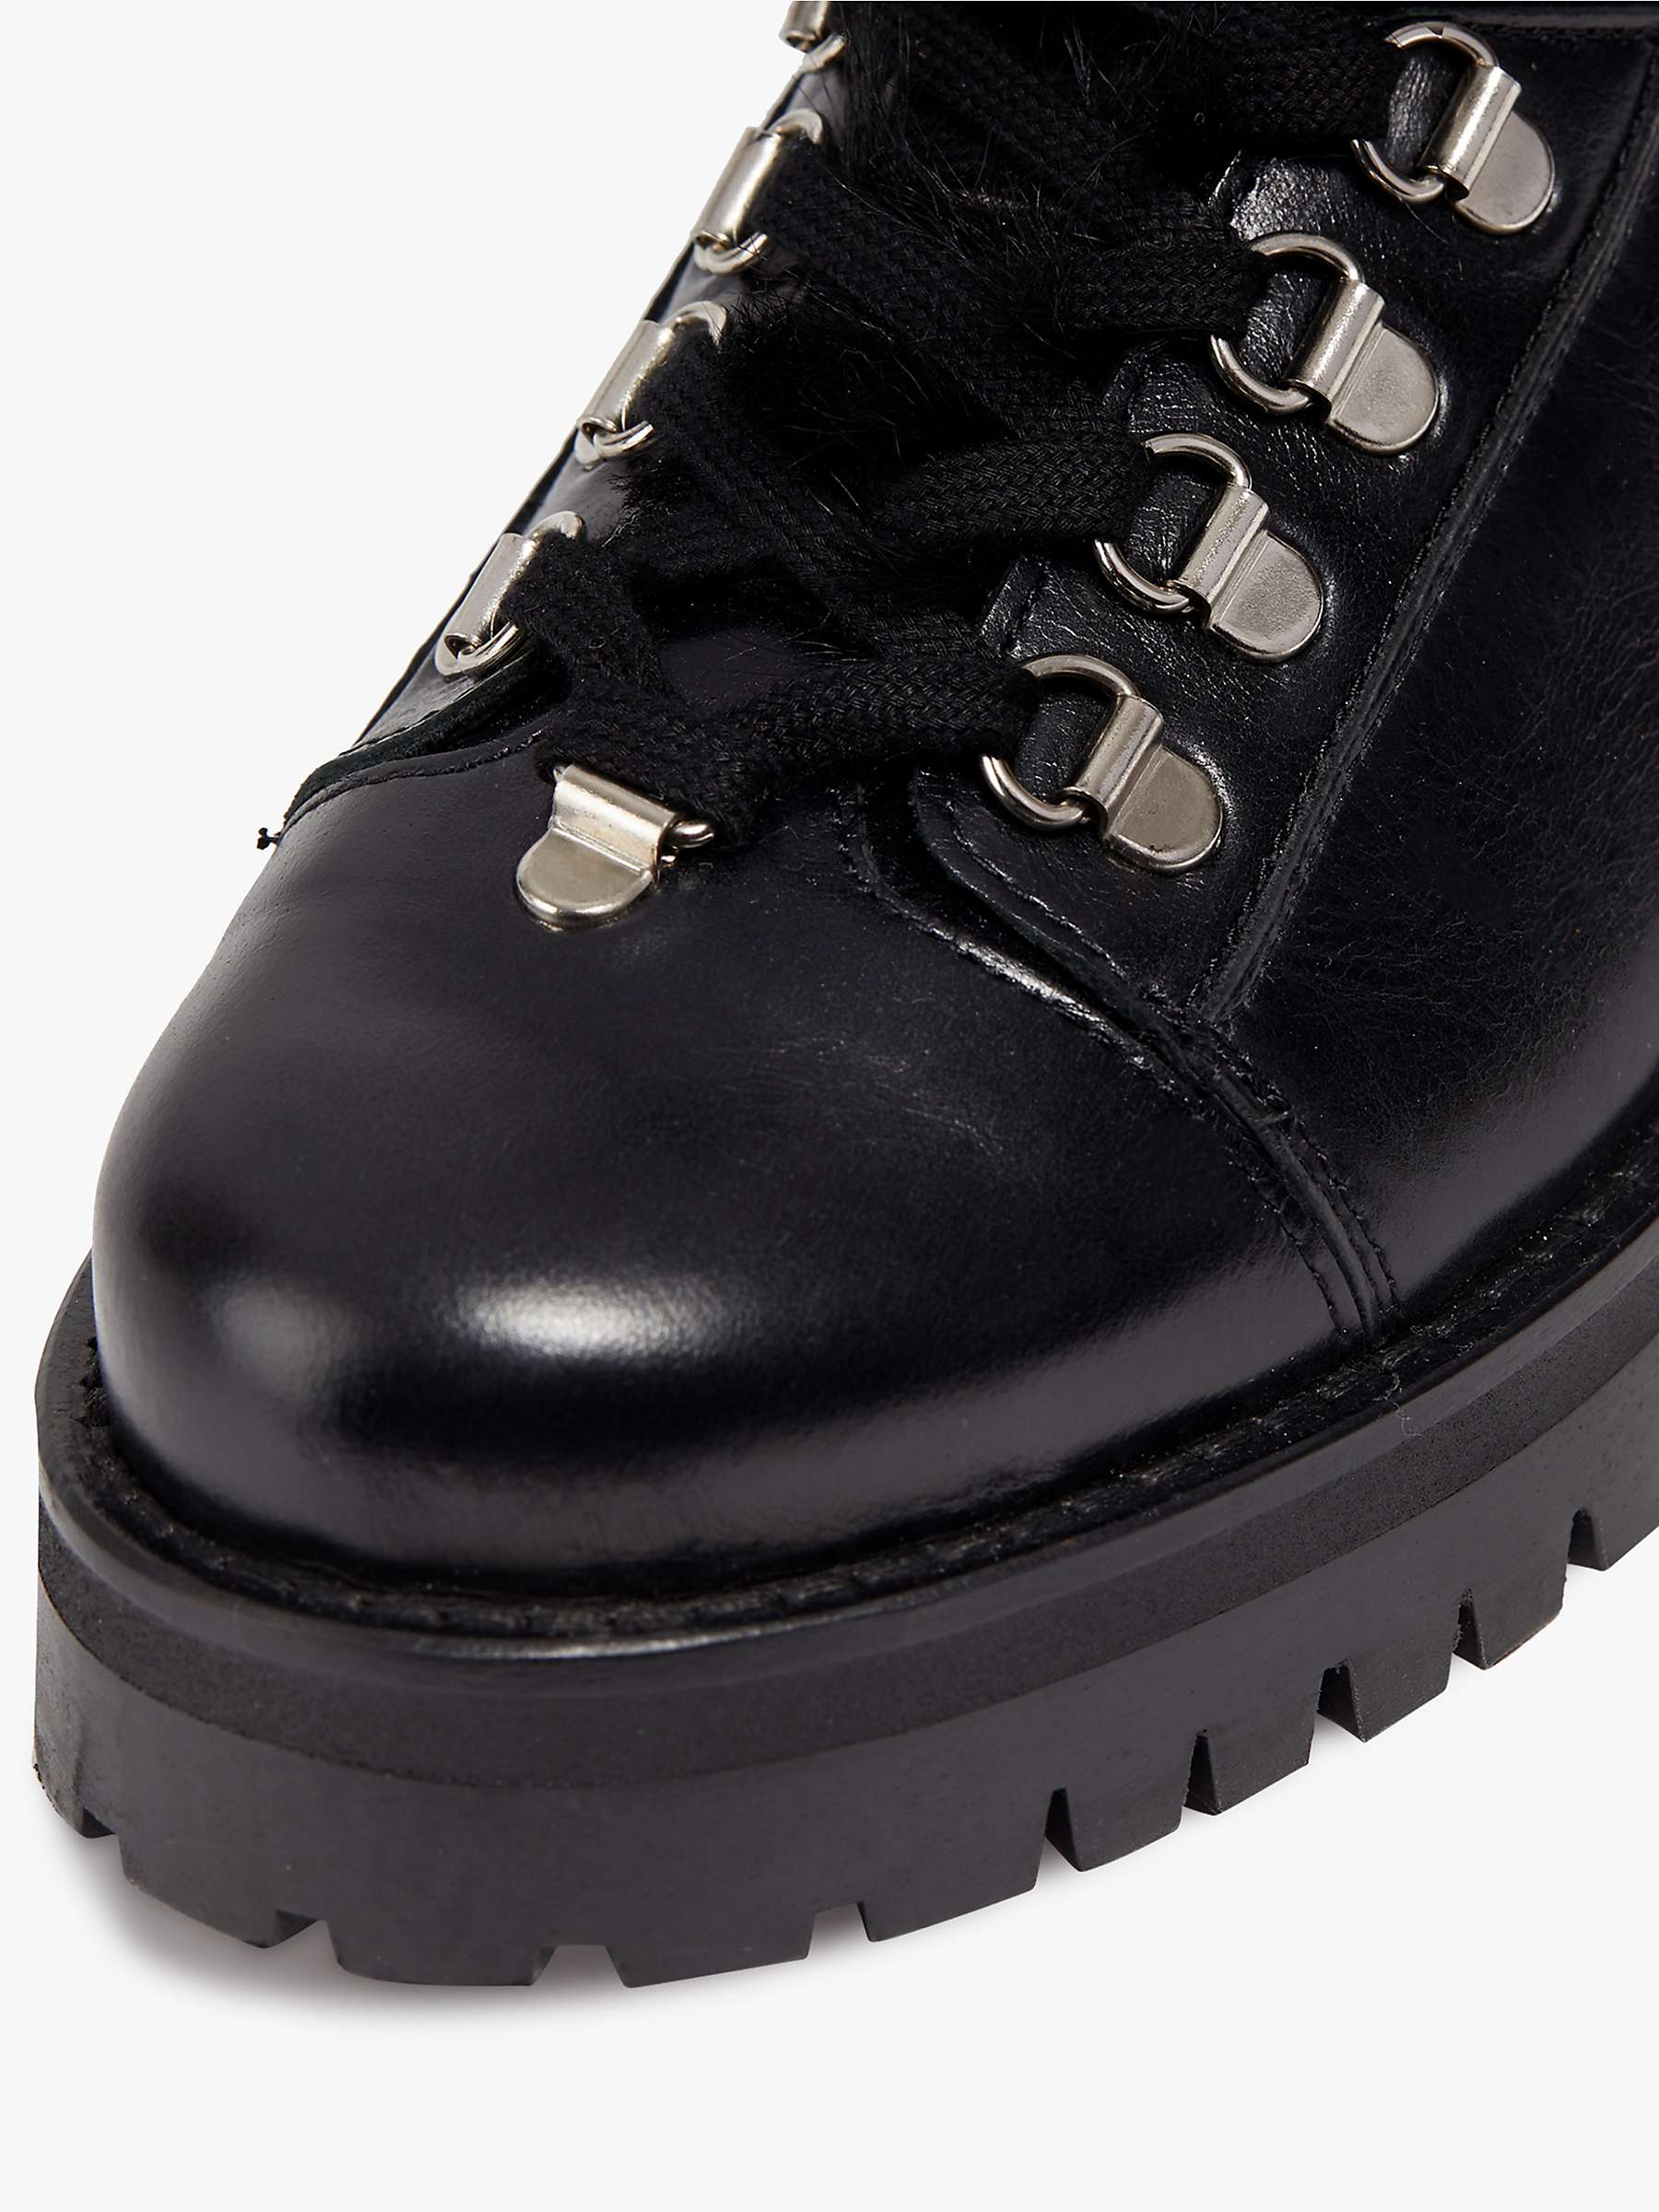 AllSaints Franka Leather Ankle Boots, Black at John Lewis & Partners